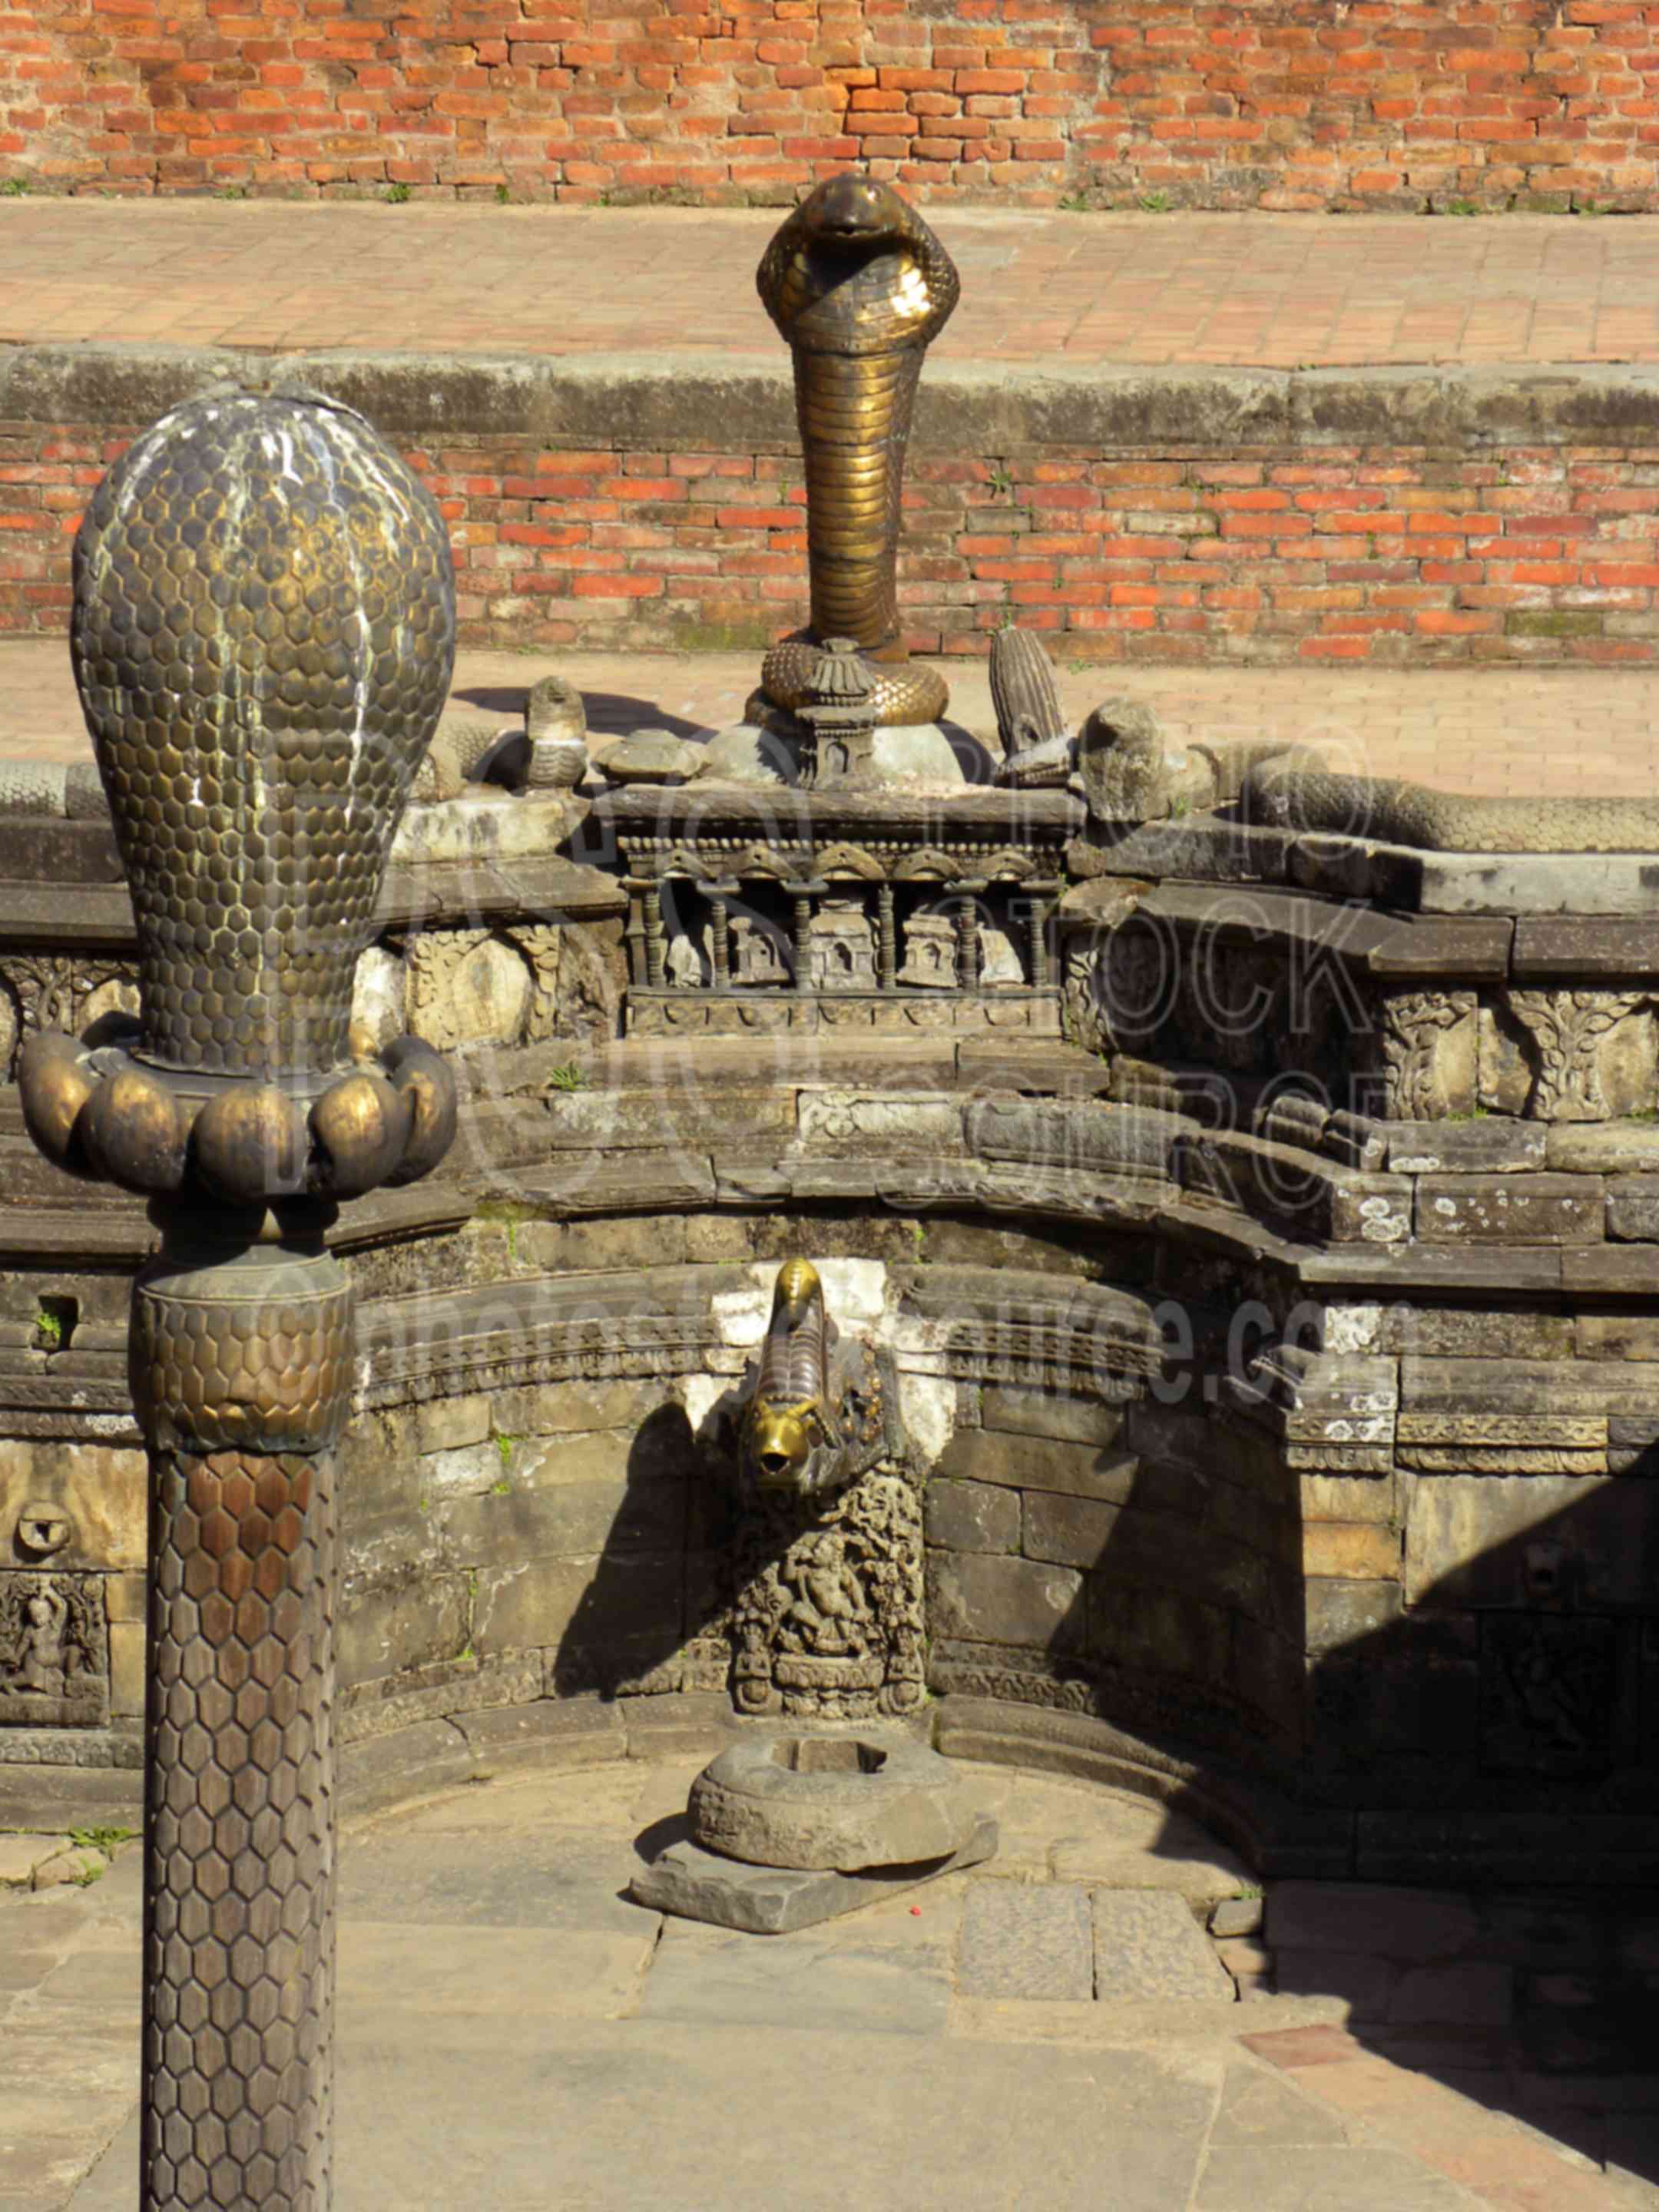 Naga Pokhari Water Tank,courtyard,taleji chowk,water,tank,well,snake,cobra,statue,durbar square